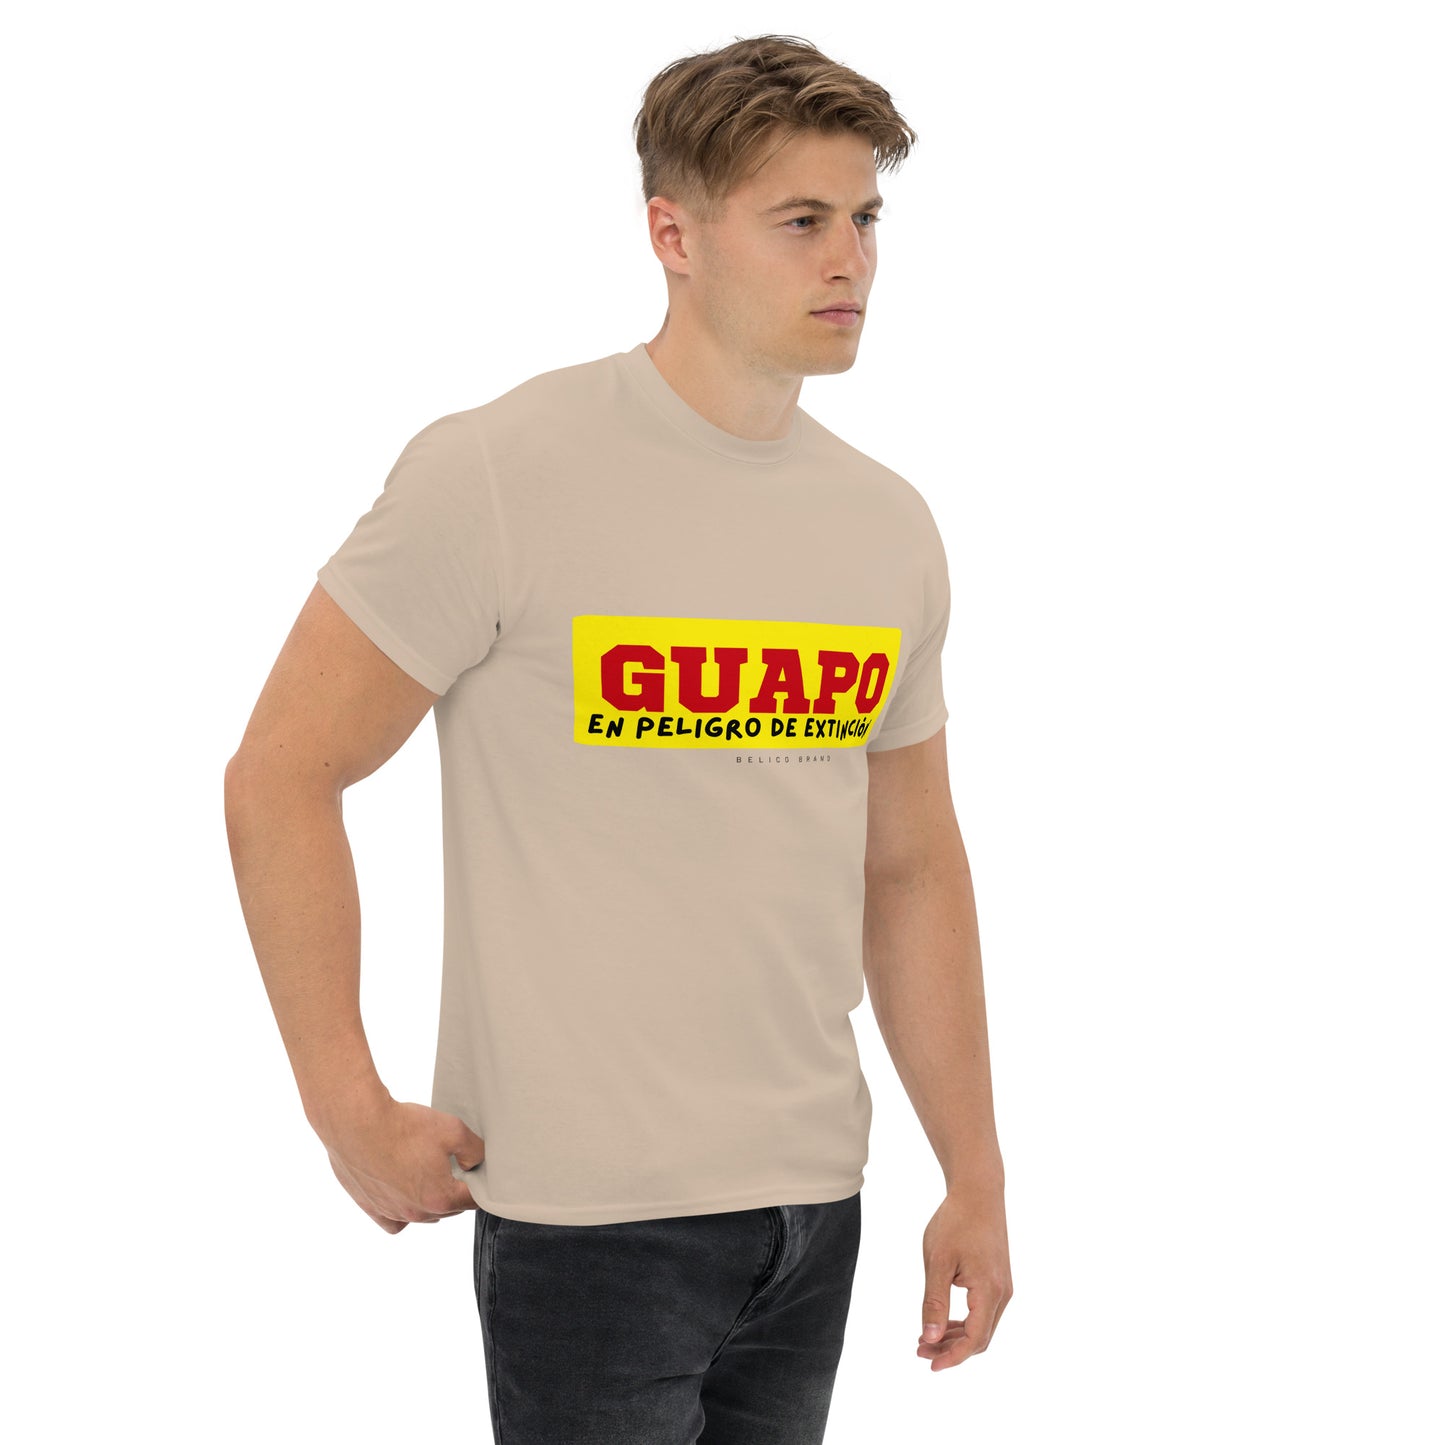 Guapo T-Shirt